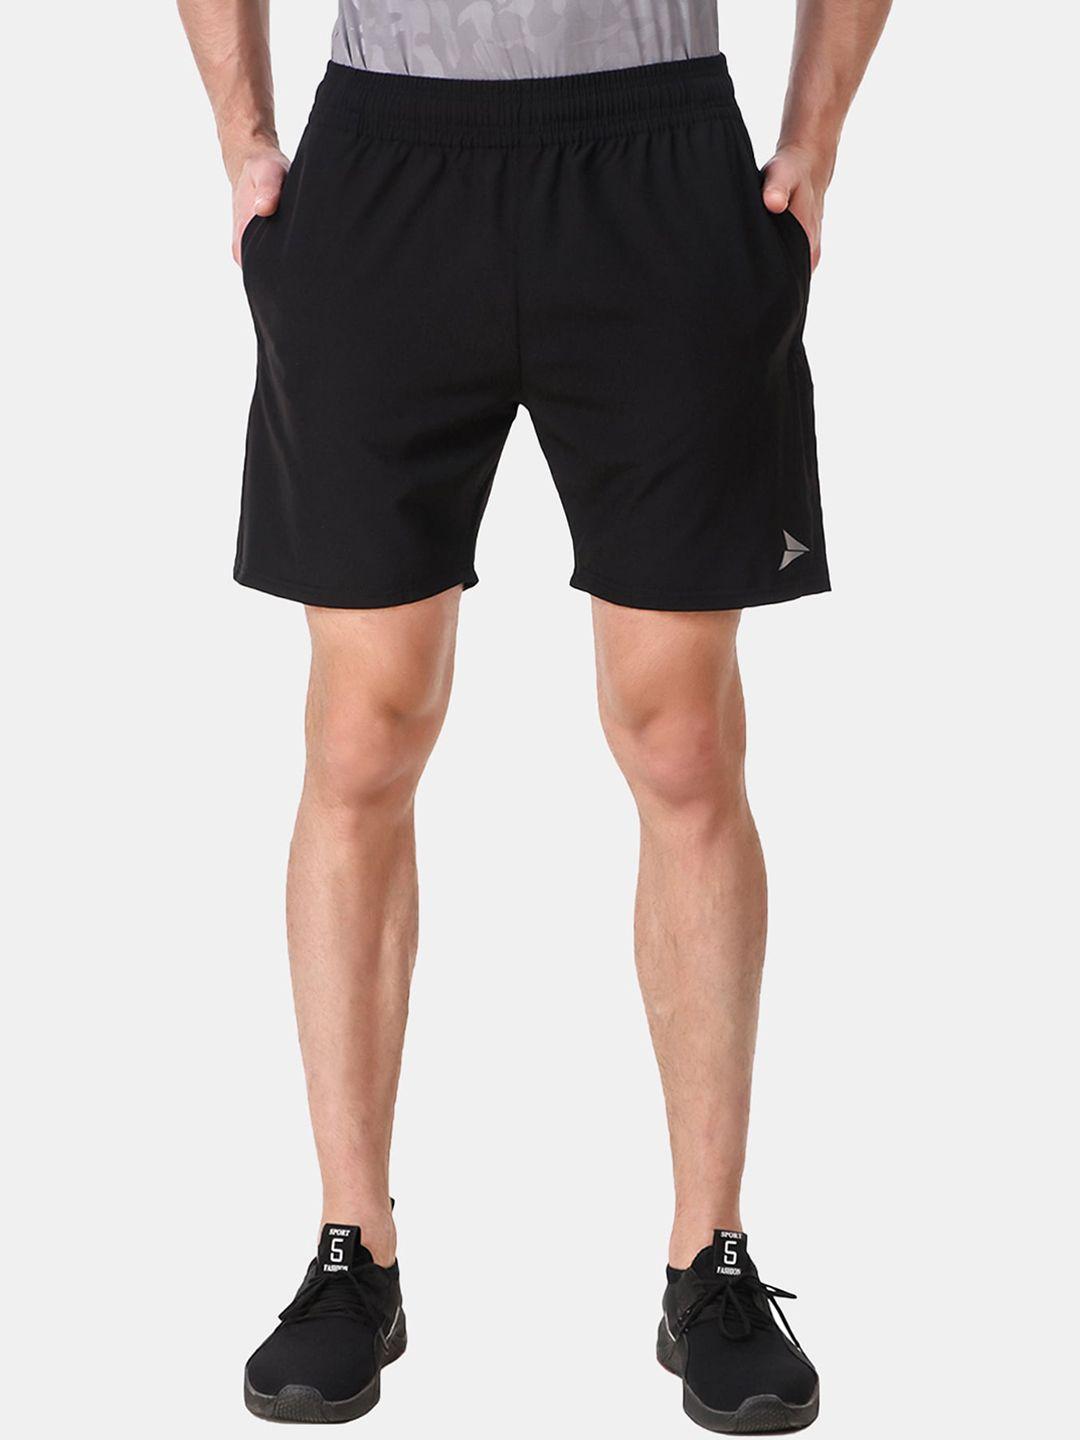 fitinc men black slim fit rapid dry running sports shorts